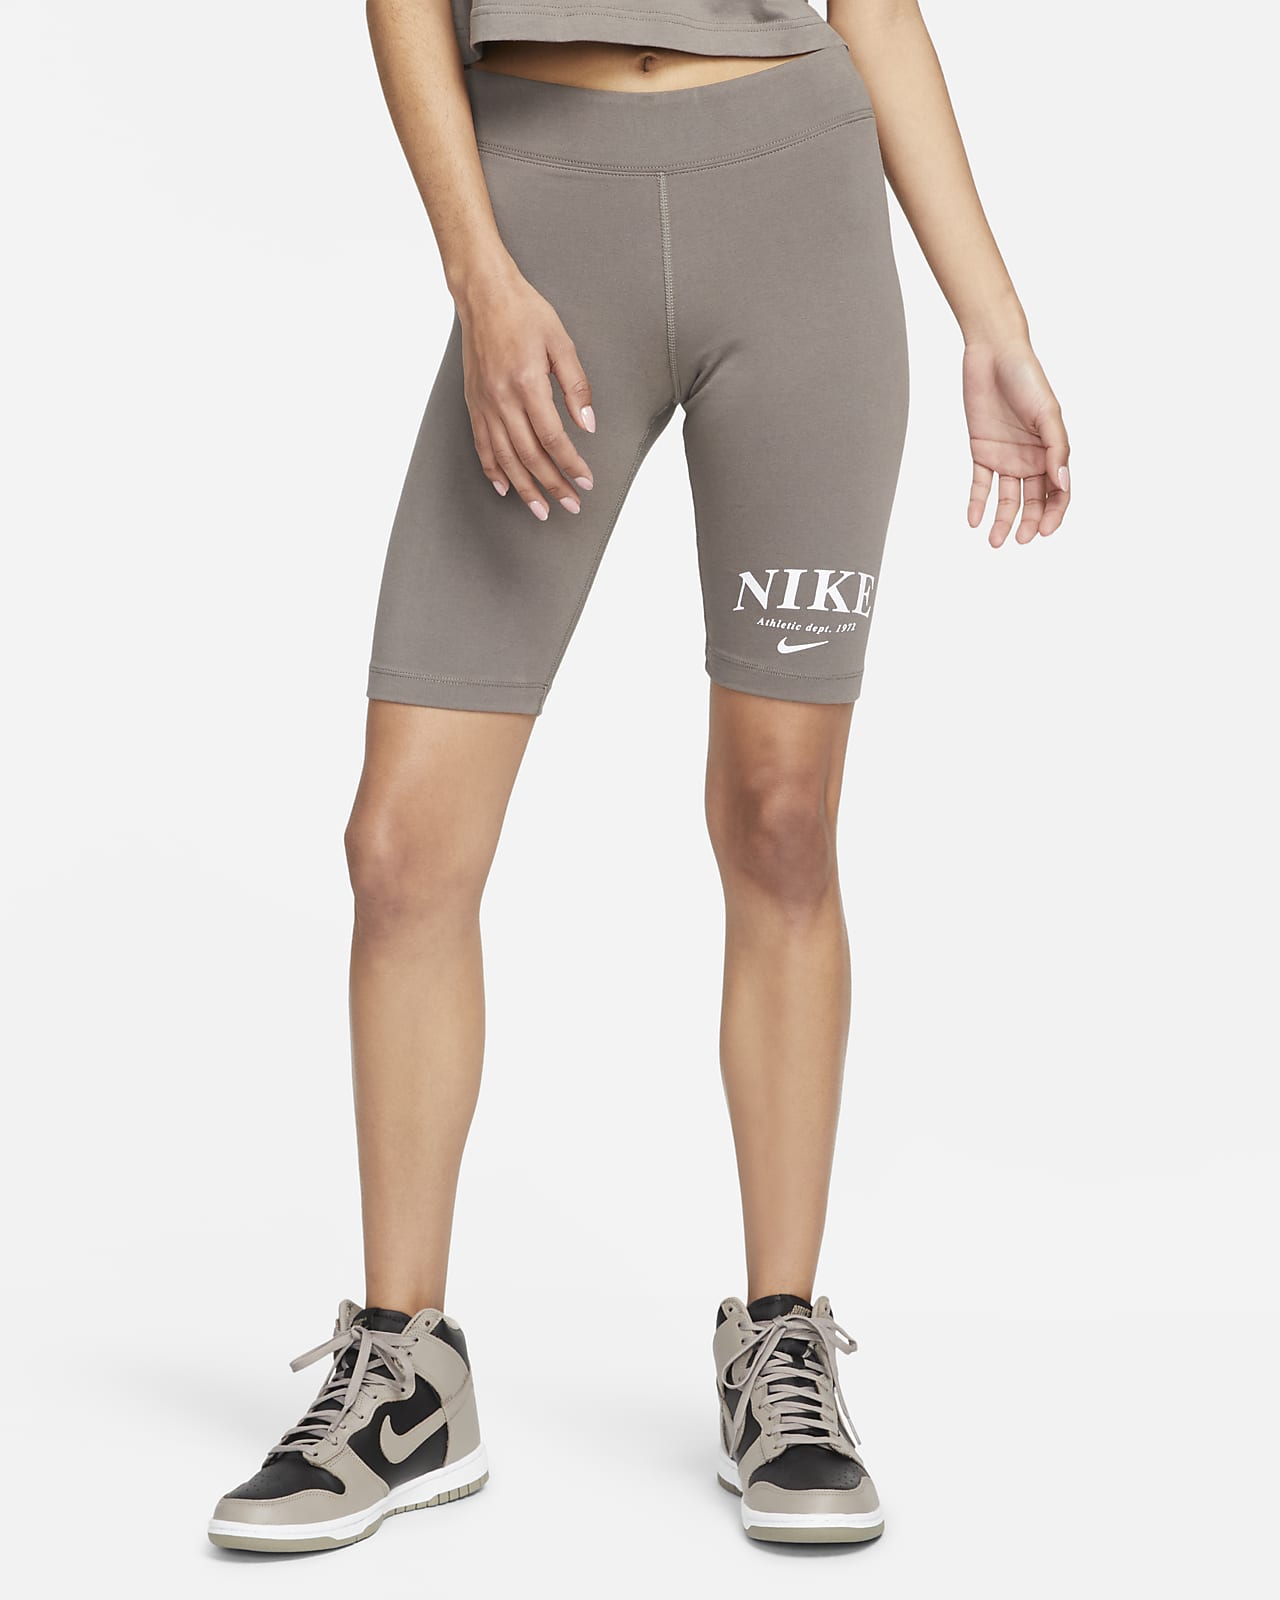 nike running bike shorts